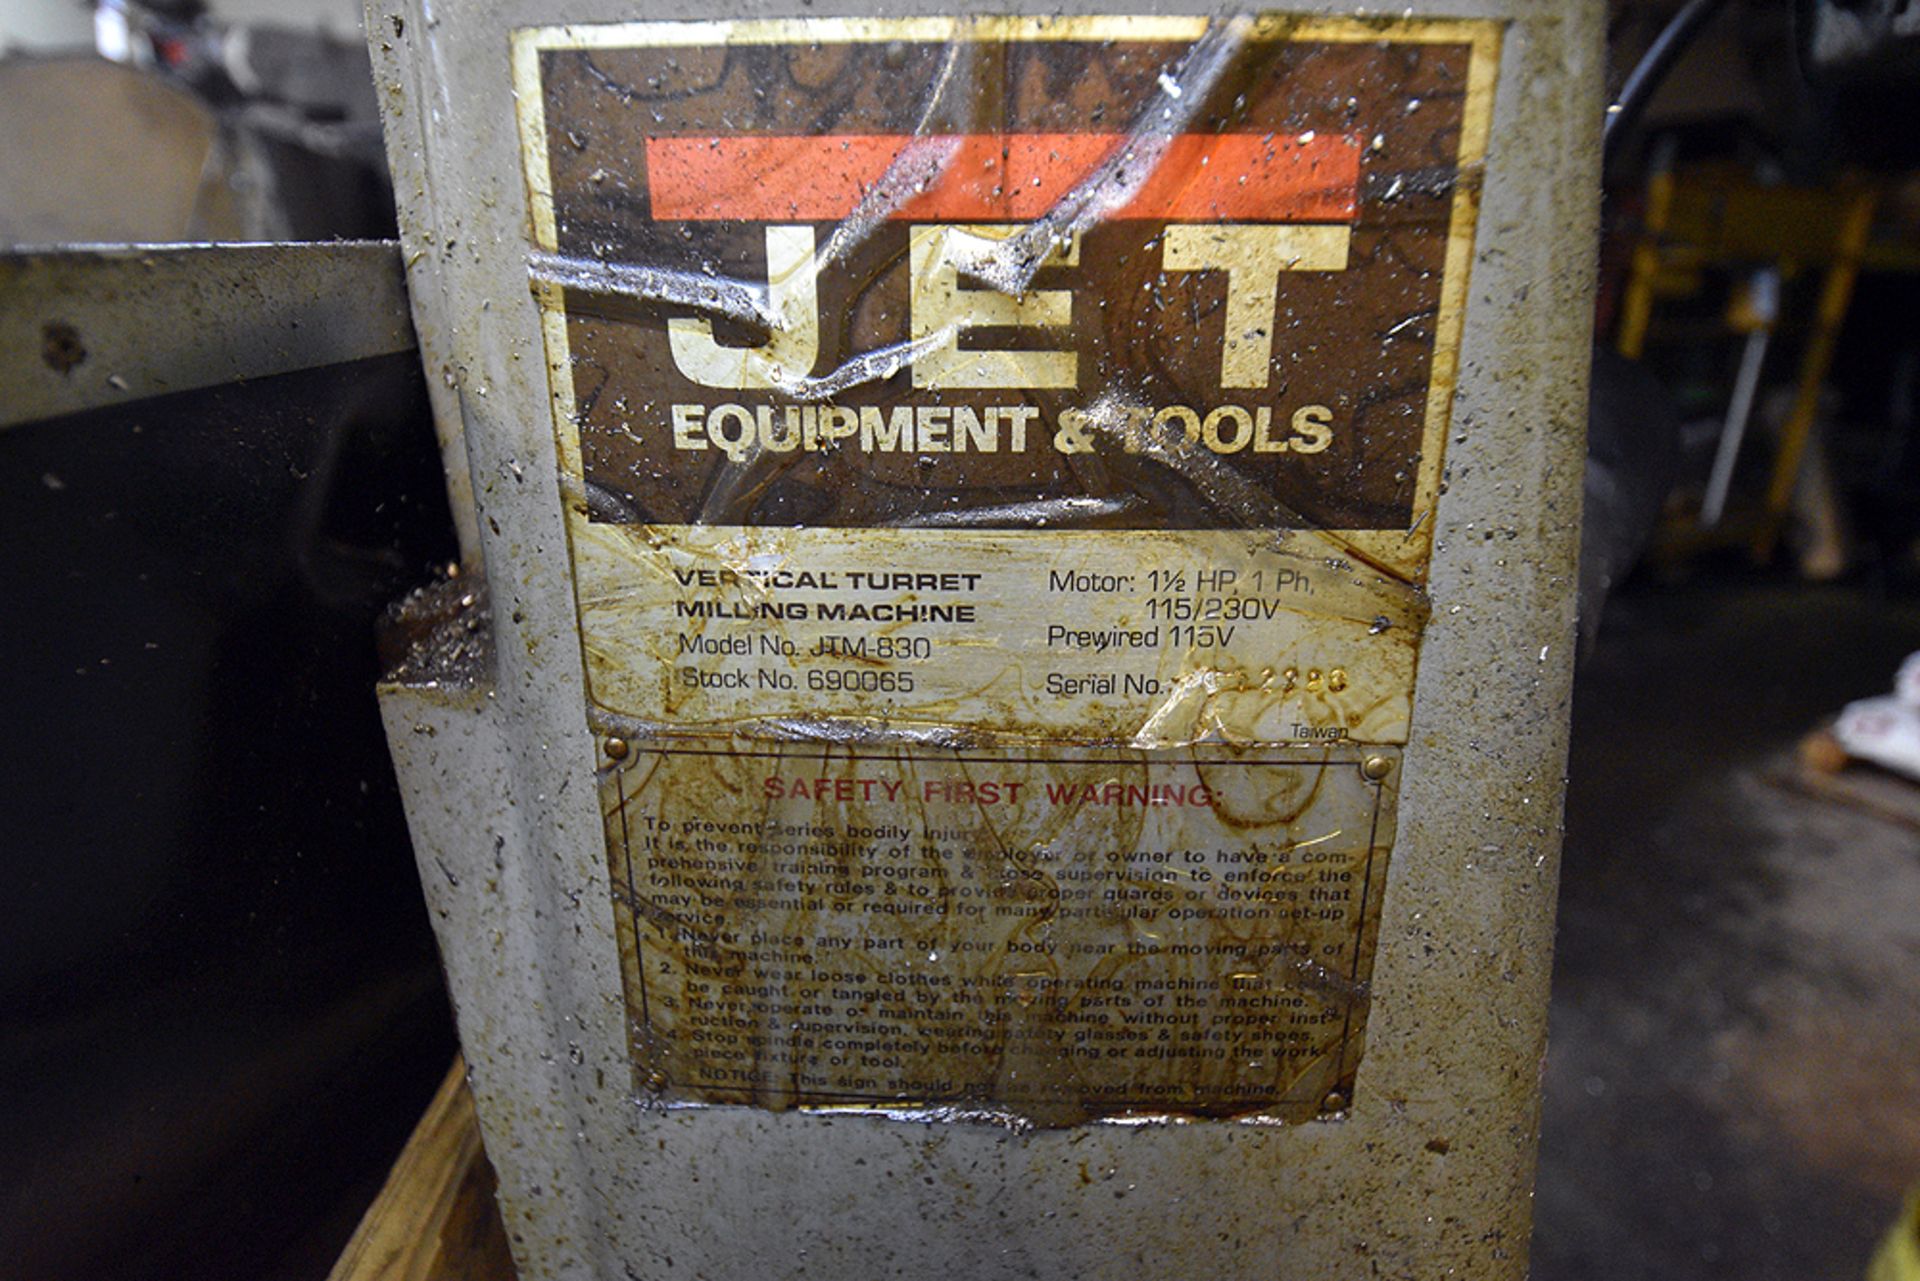 Jet Vertical Turret Milling Machine, Model JTM-830, Stock Number 690065, 1.5HP Motor, 30" Table - Image 4 of 4